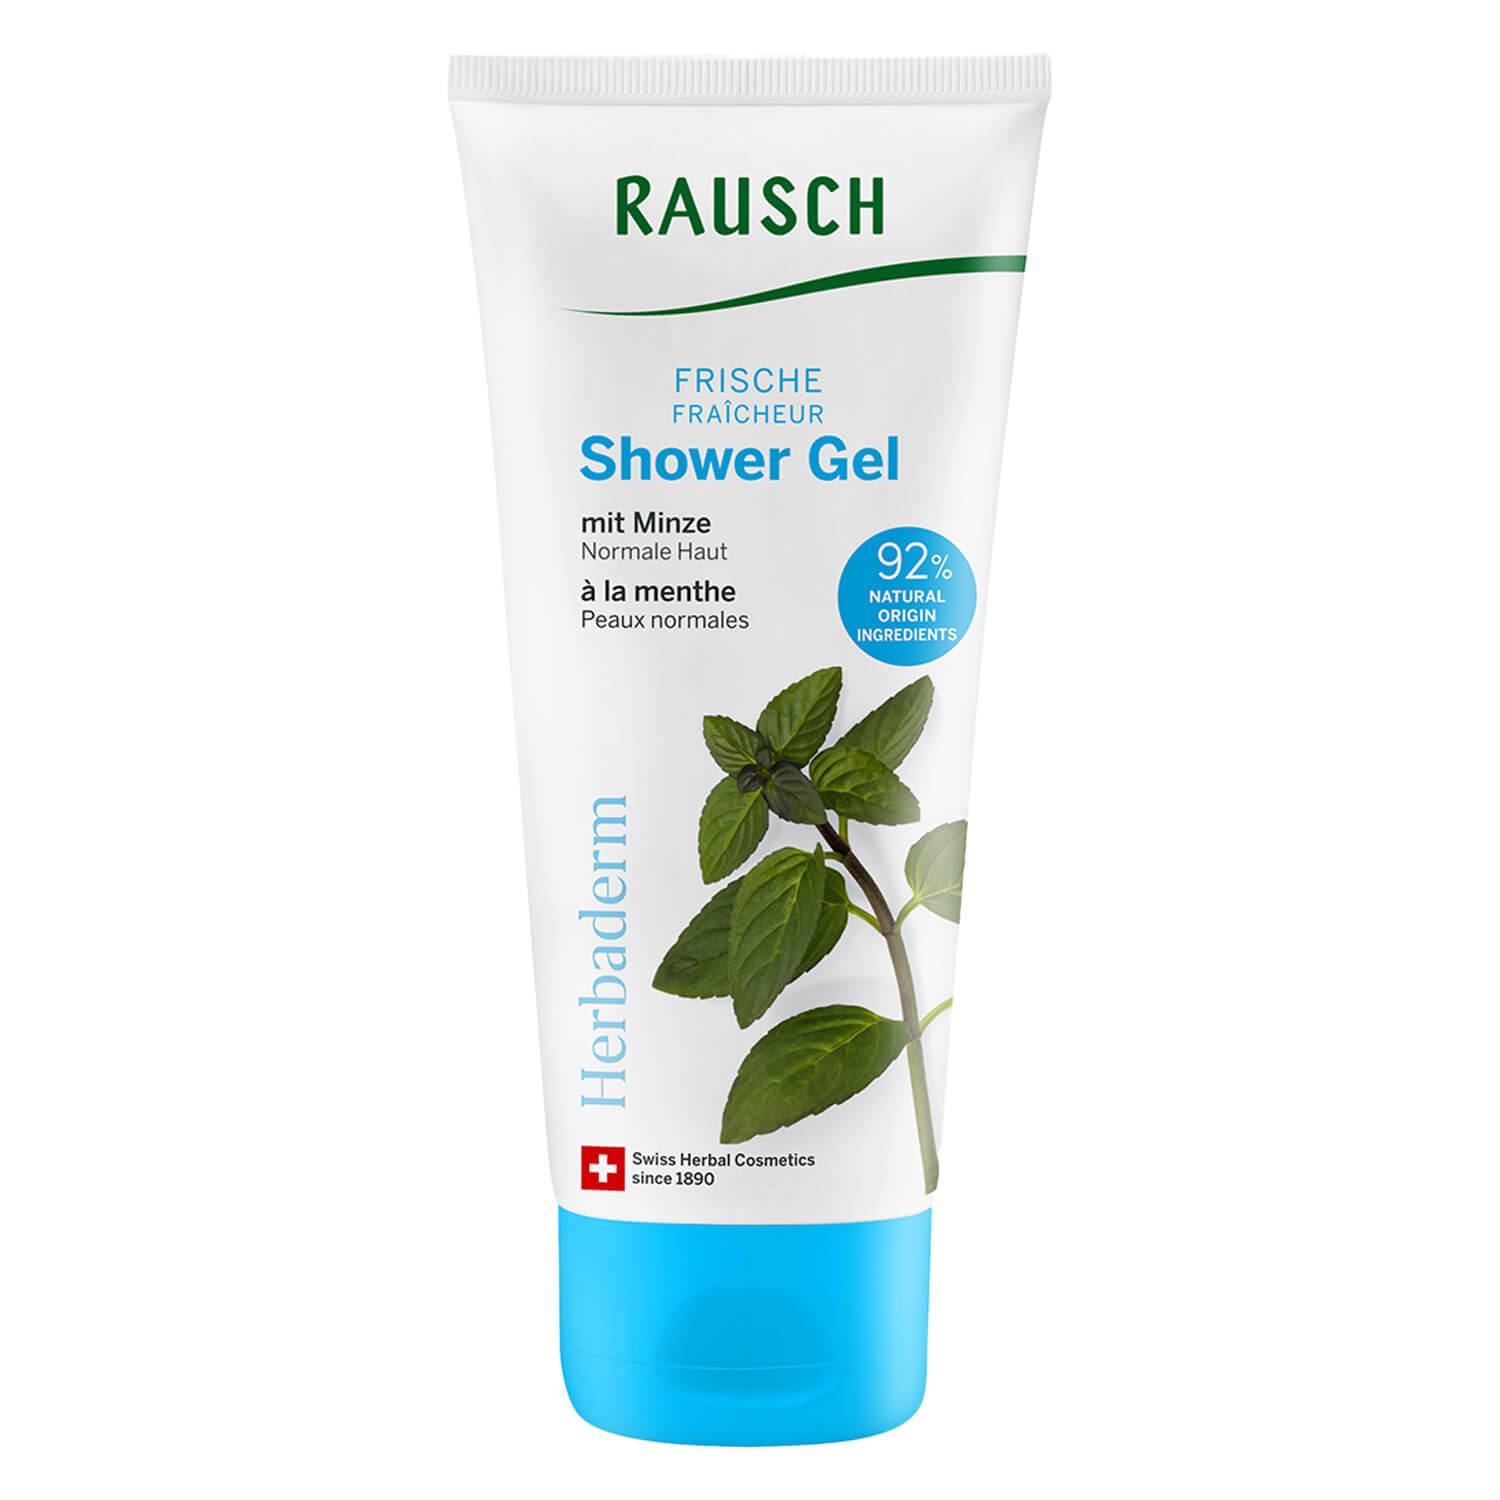 RAUSCH Body - Fresh Shower Gel with mint